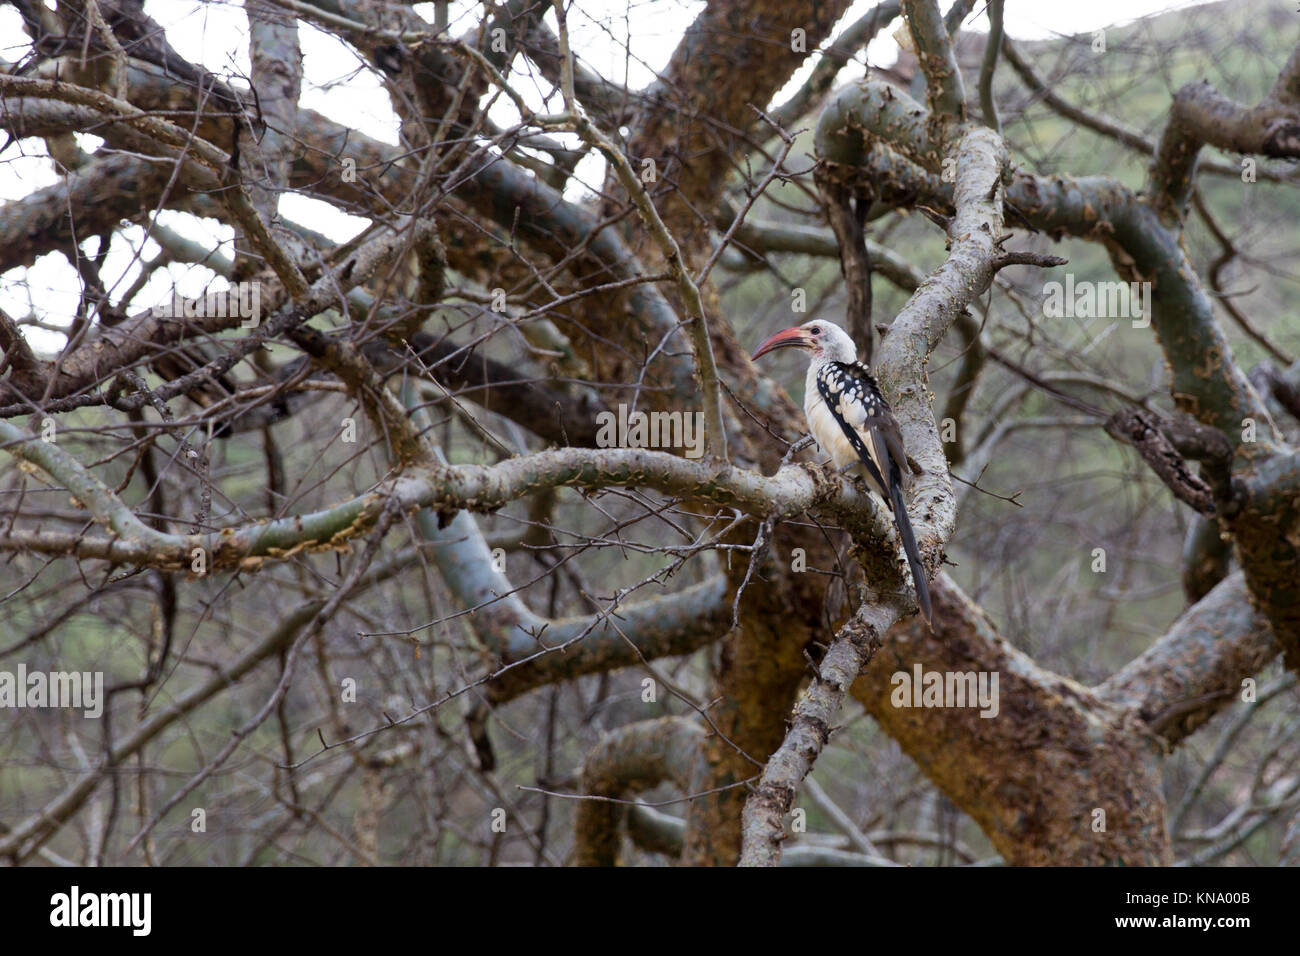 a red-billed hornbill hiddent in its habitat, a tree Stock Photo